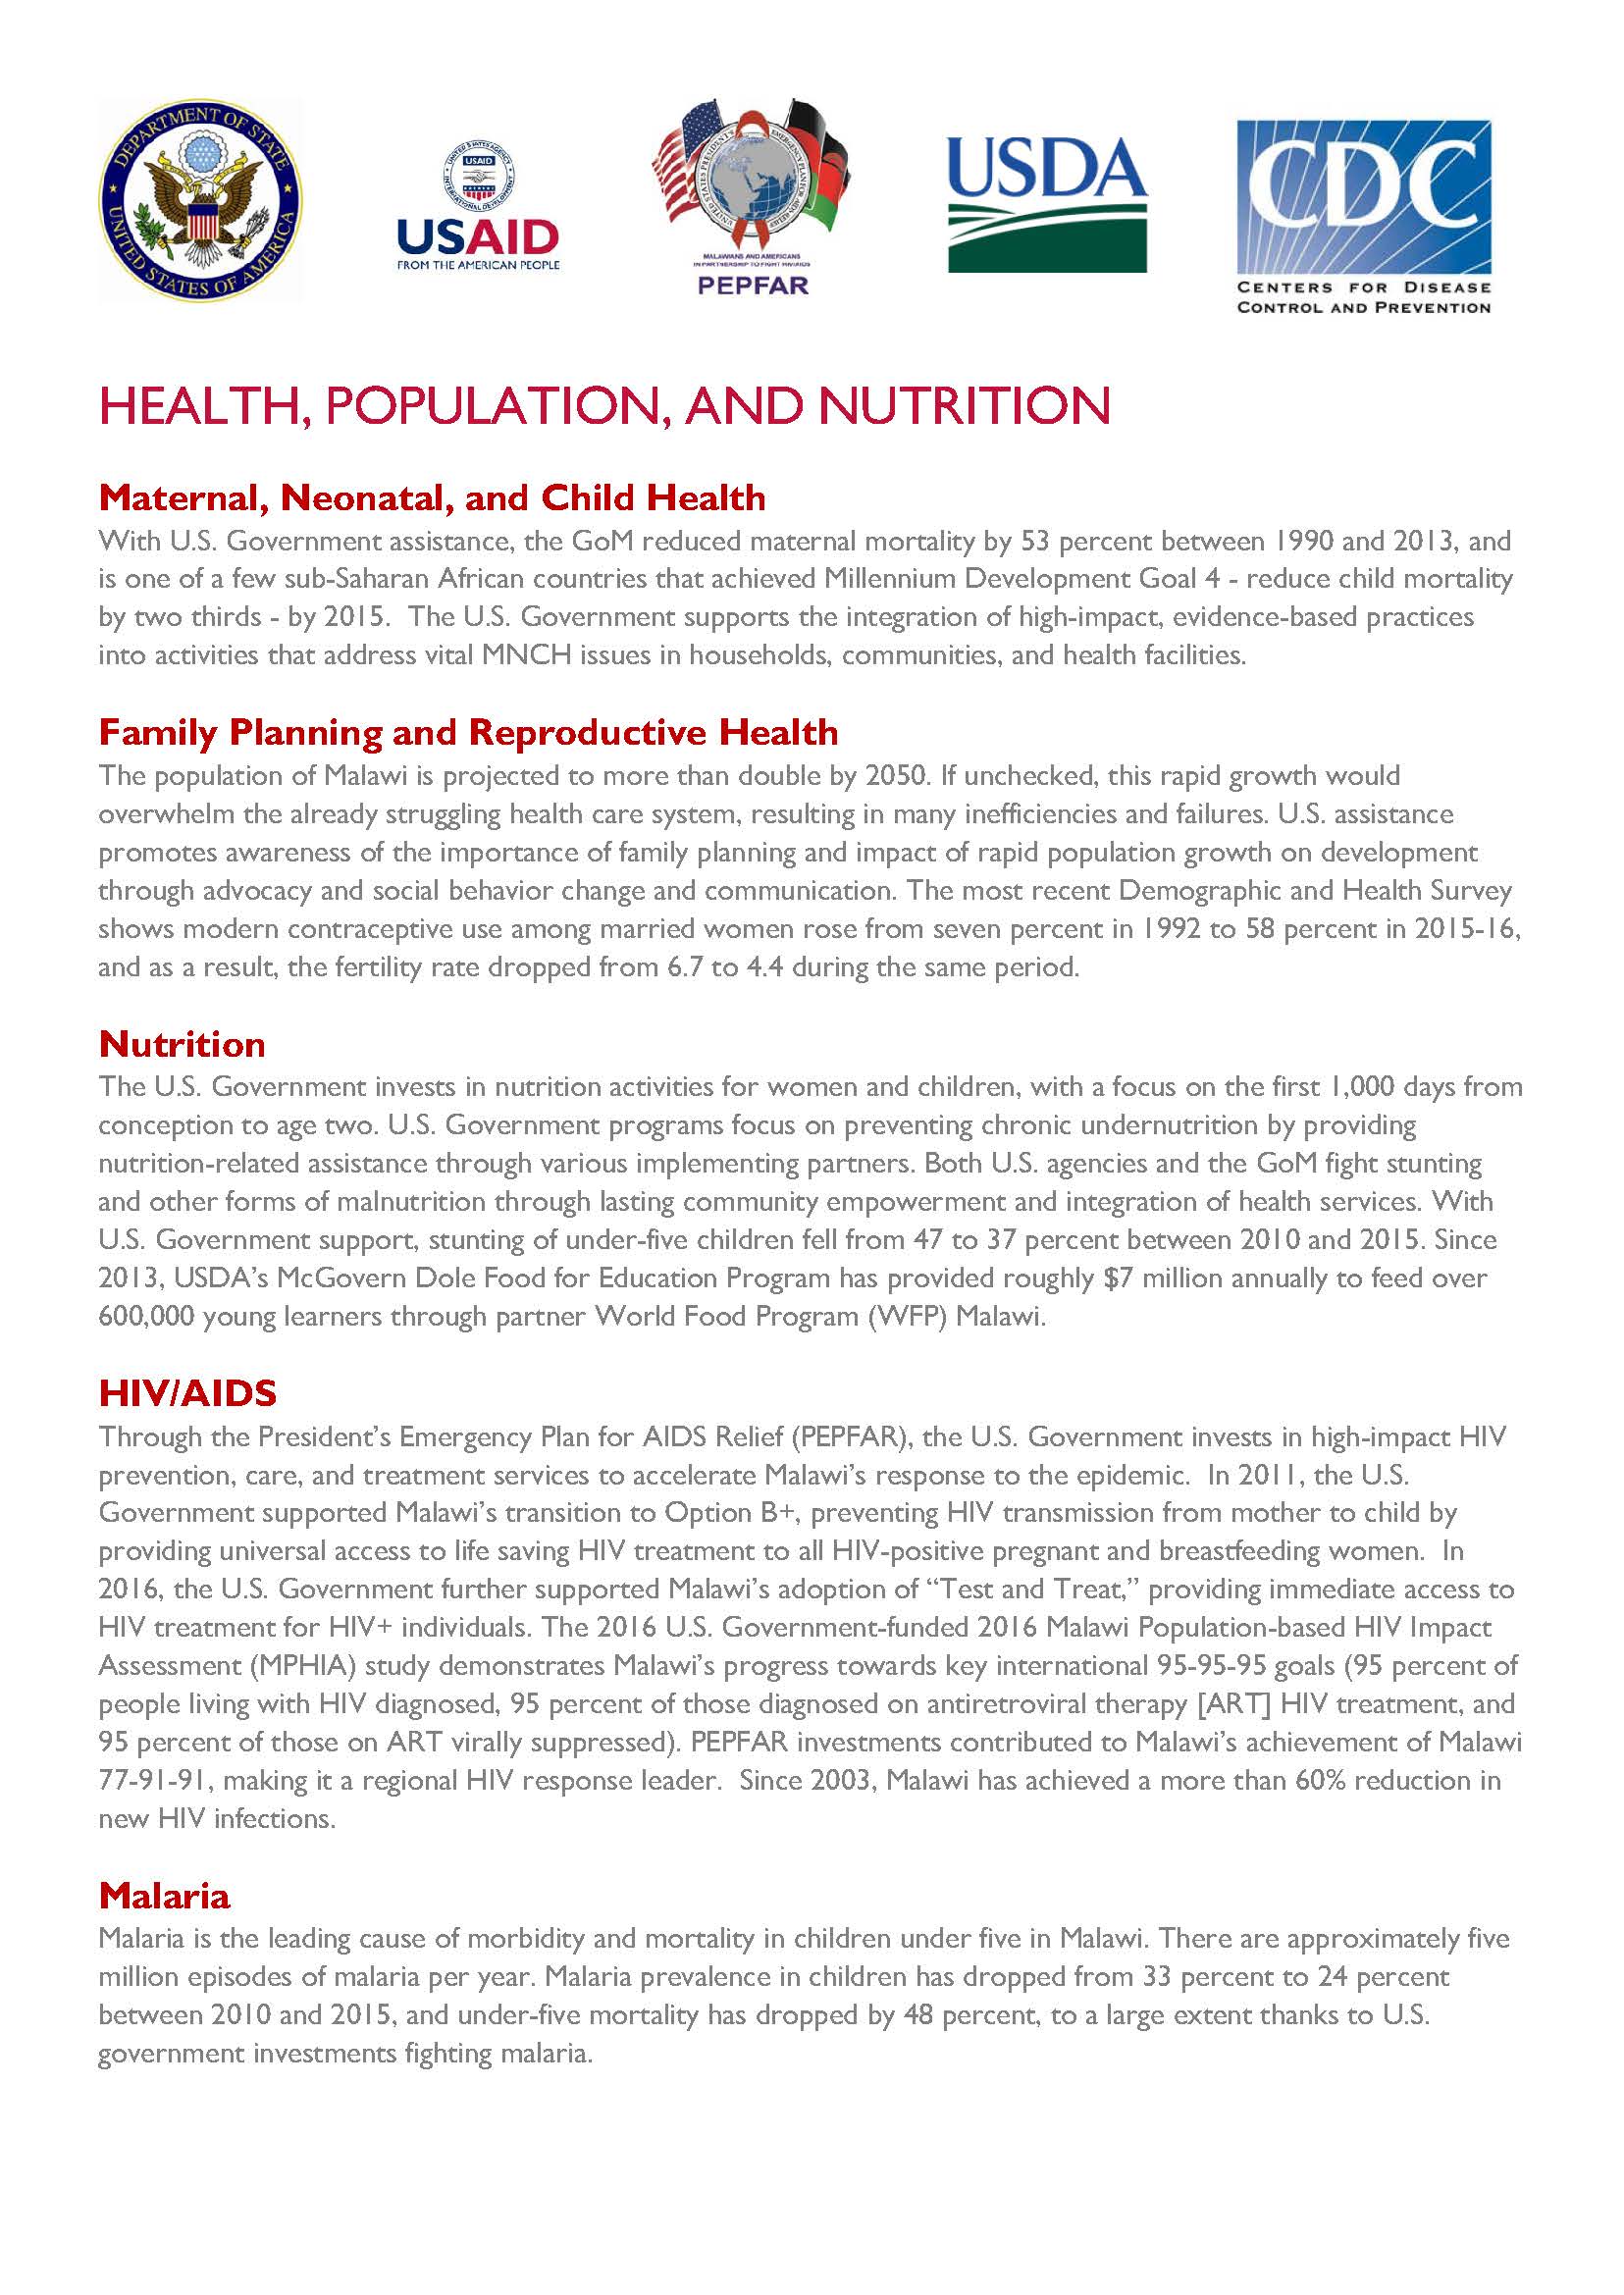 USG Malawi Health, Population and Nutrition